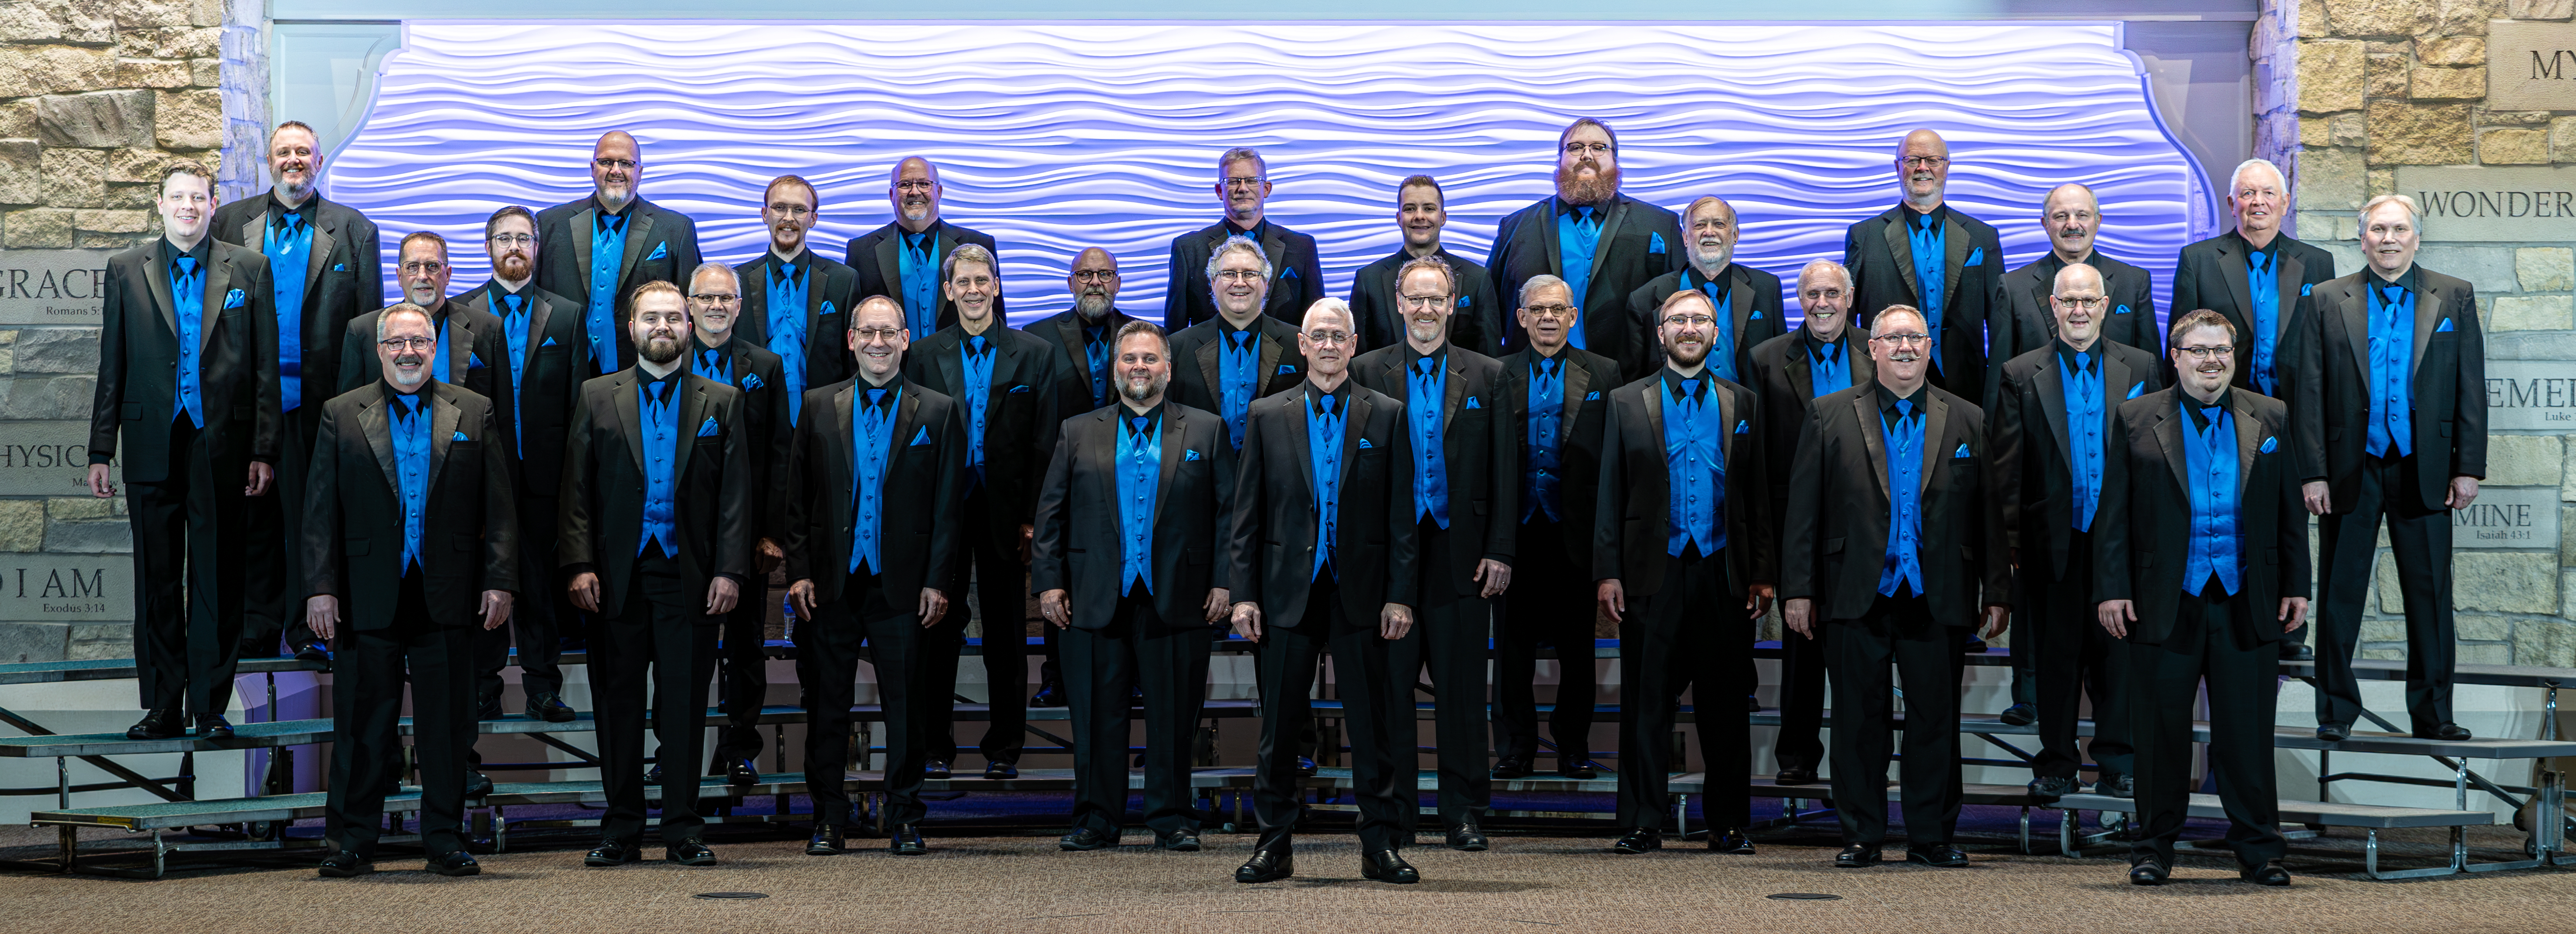 Fargo-Moorhead’s Premier Men’s A Cappella Group